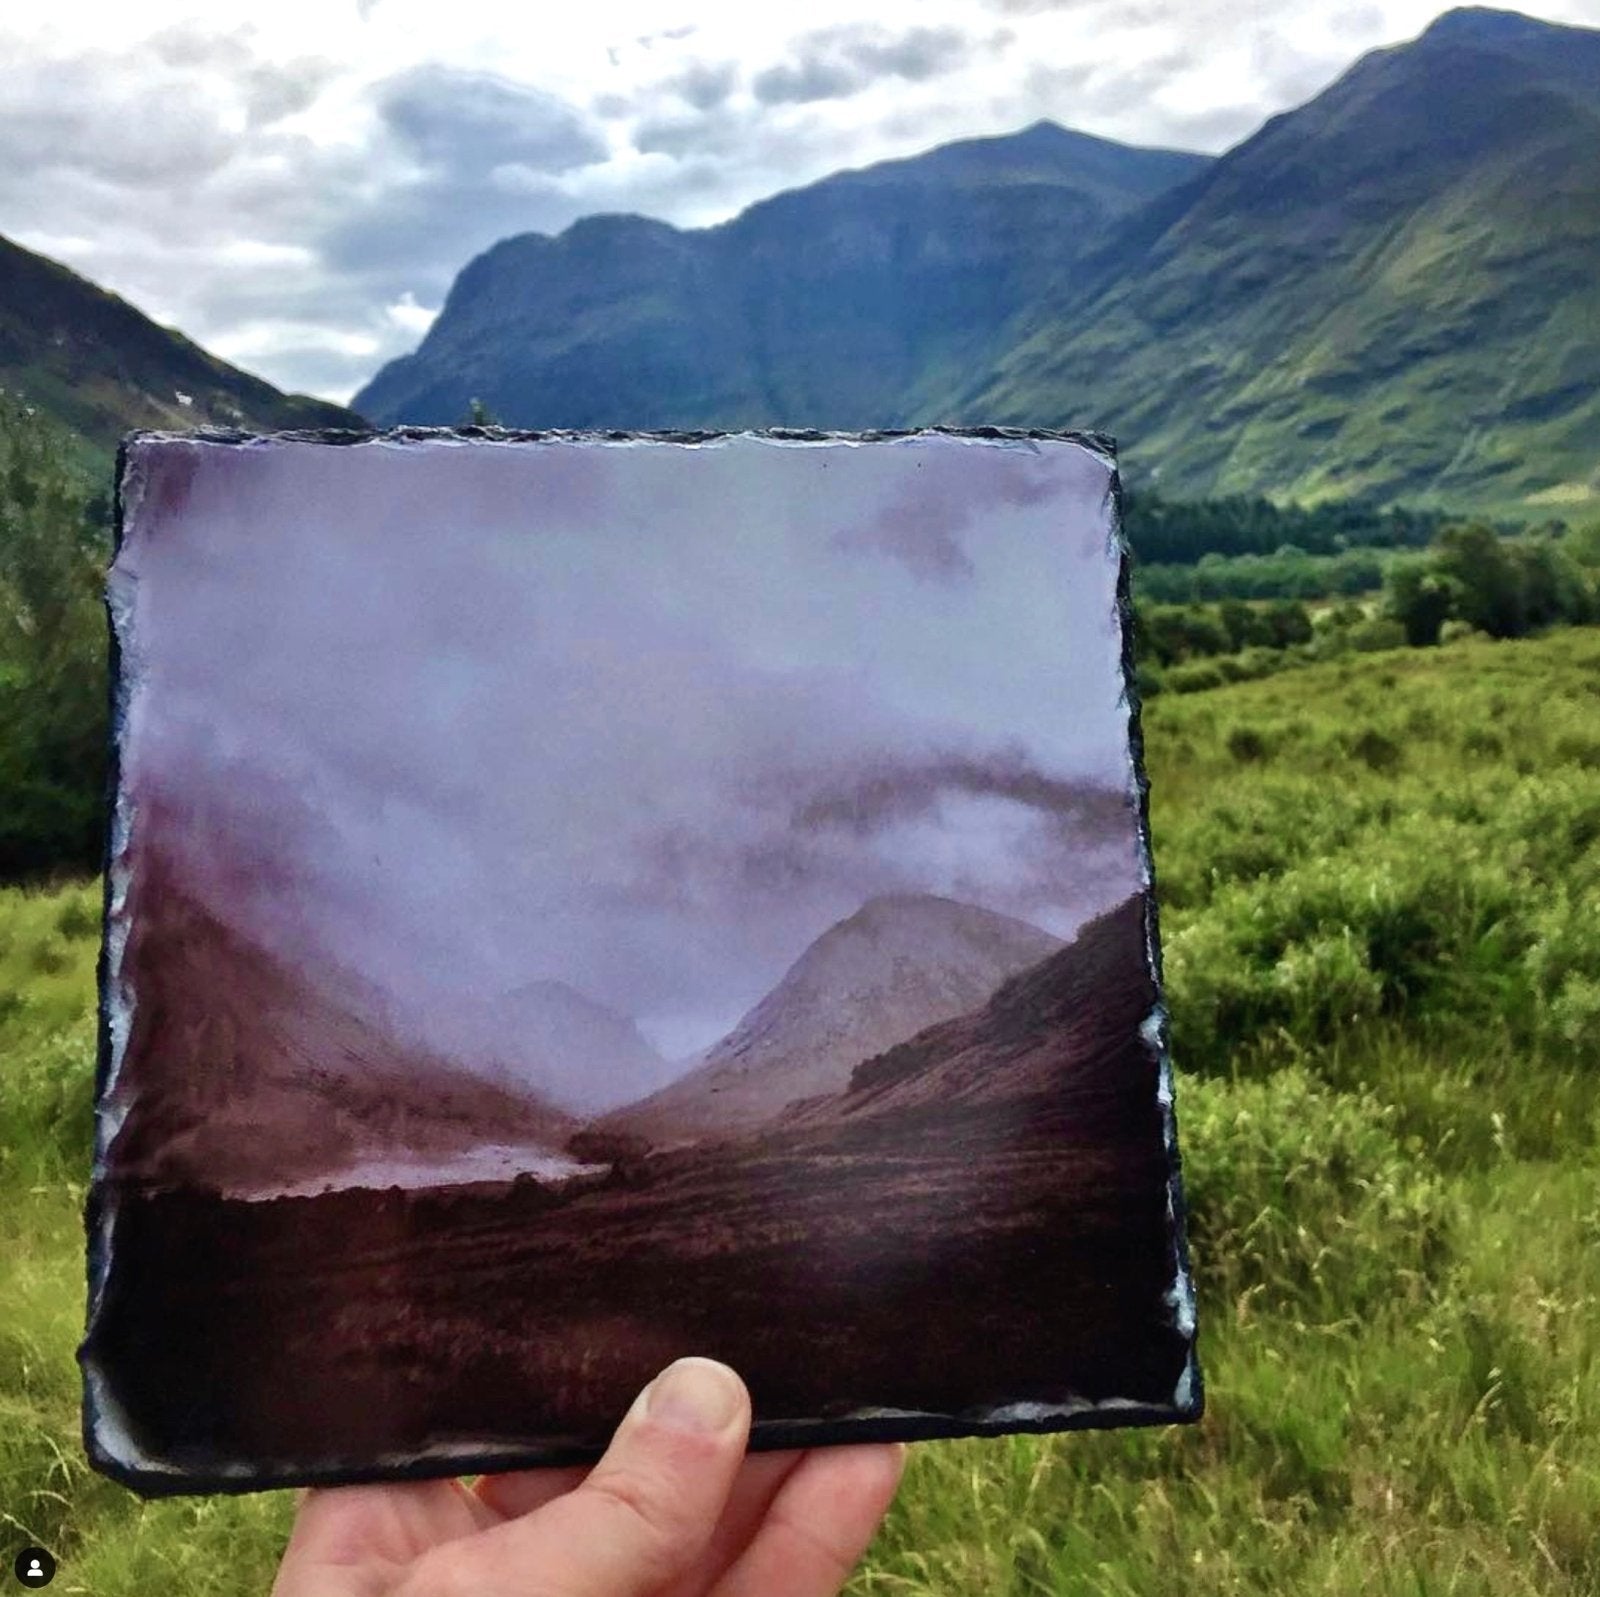 Ailsa Craig Dusk Arran Slate Art-Slate Art-Arran Art Gallery-Paintings, Prints, Homeware, Art Gifts From Scotland By Scottish Artist Kevin Hunter